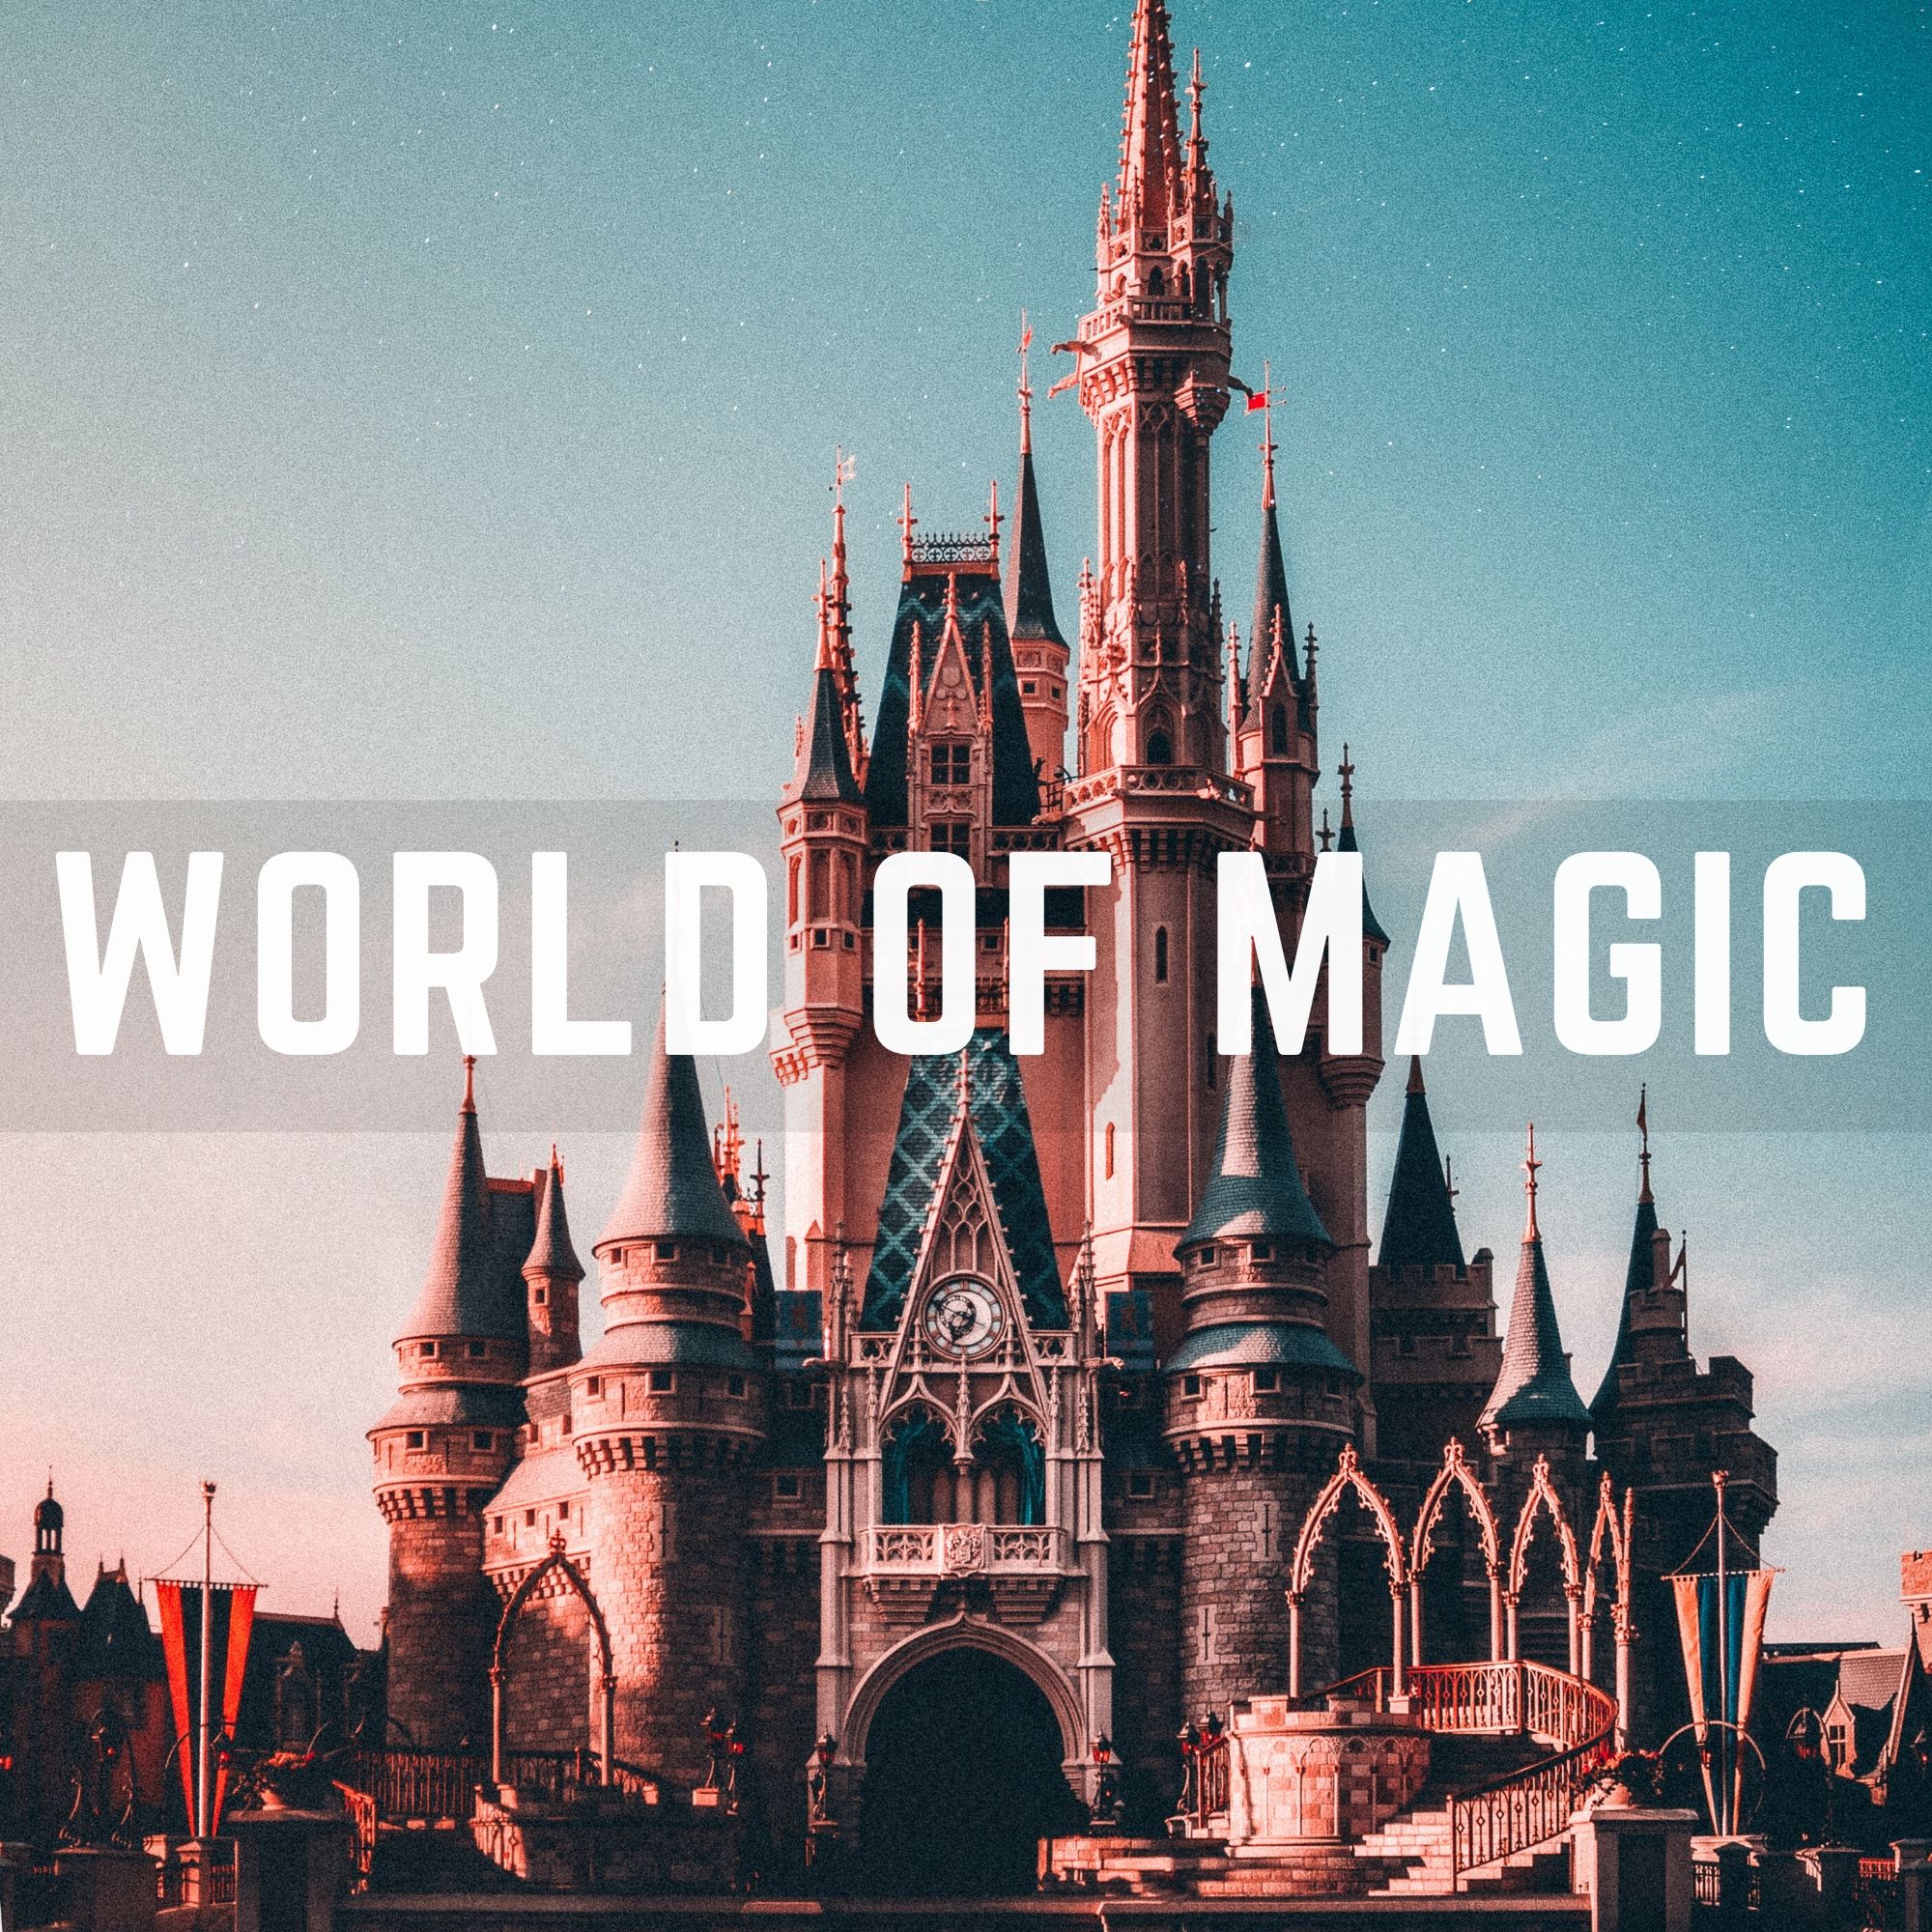 World of Magic